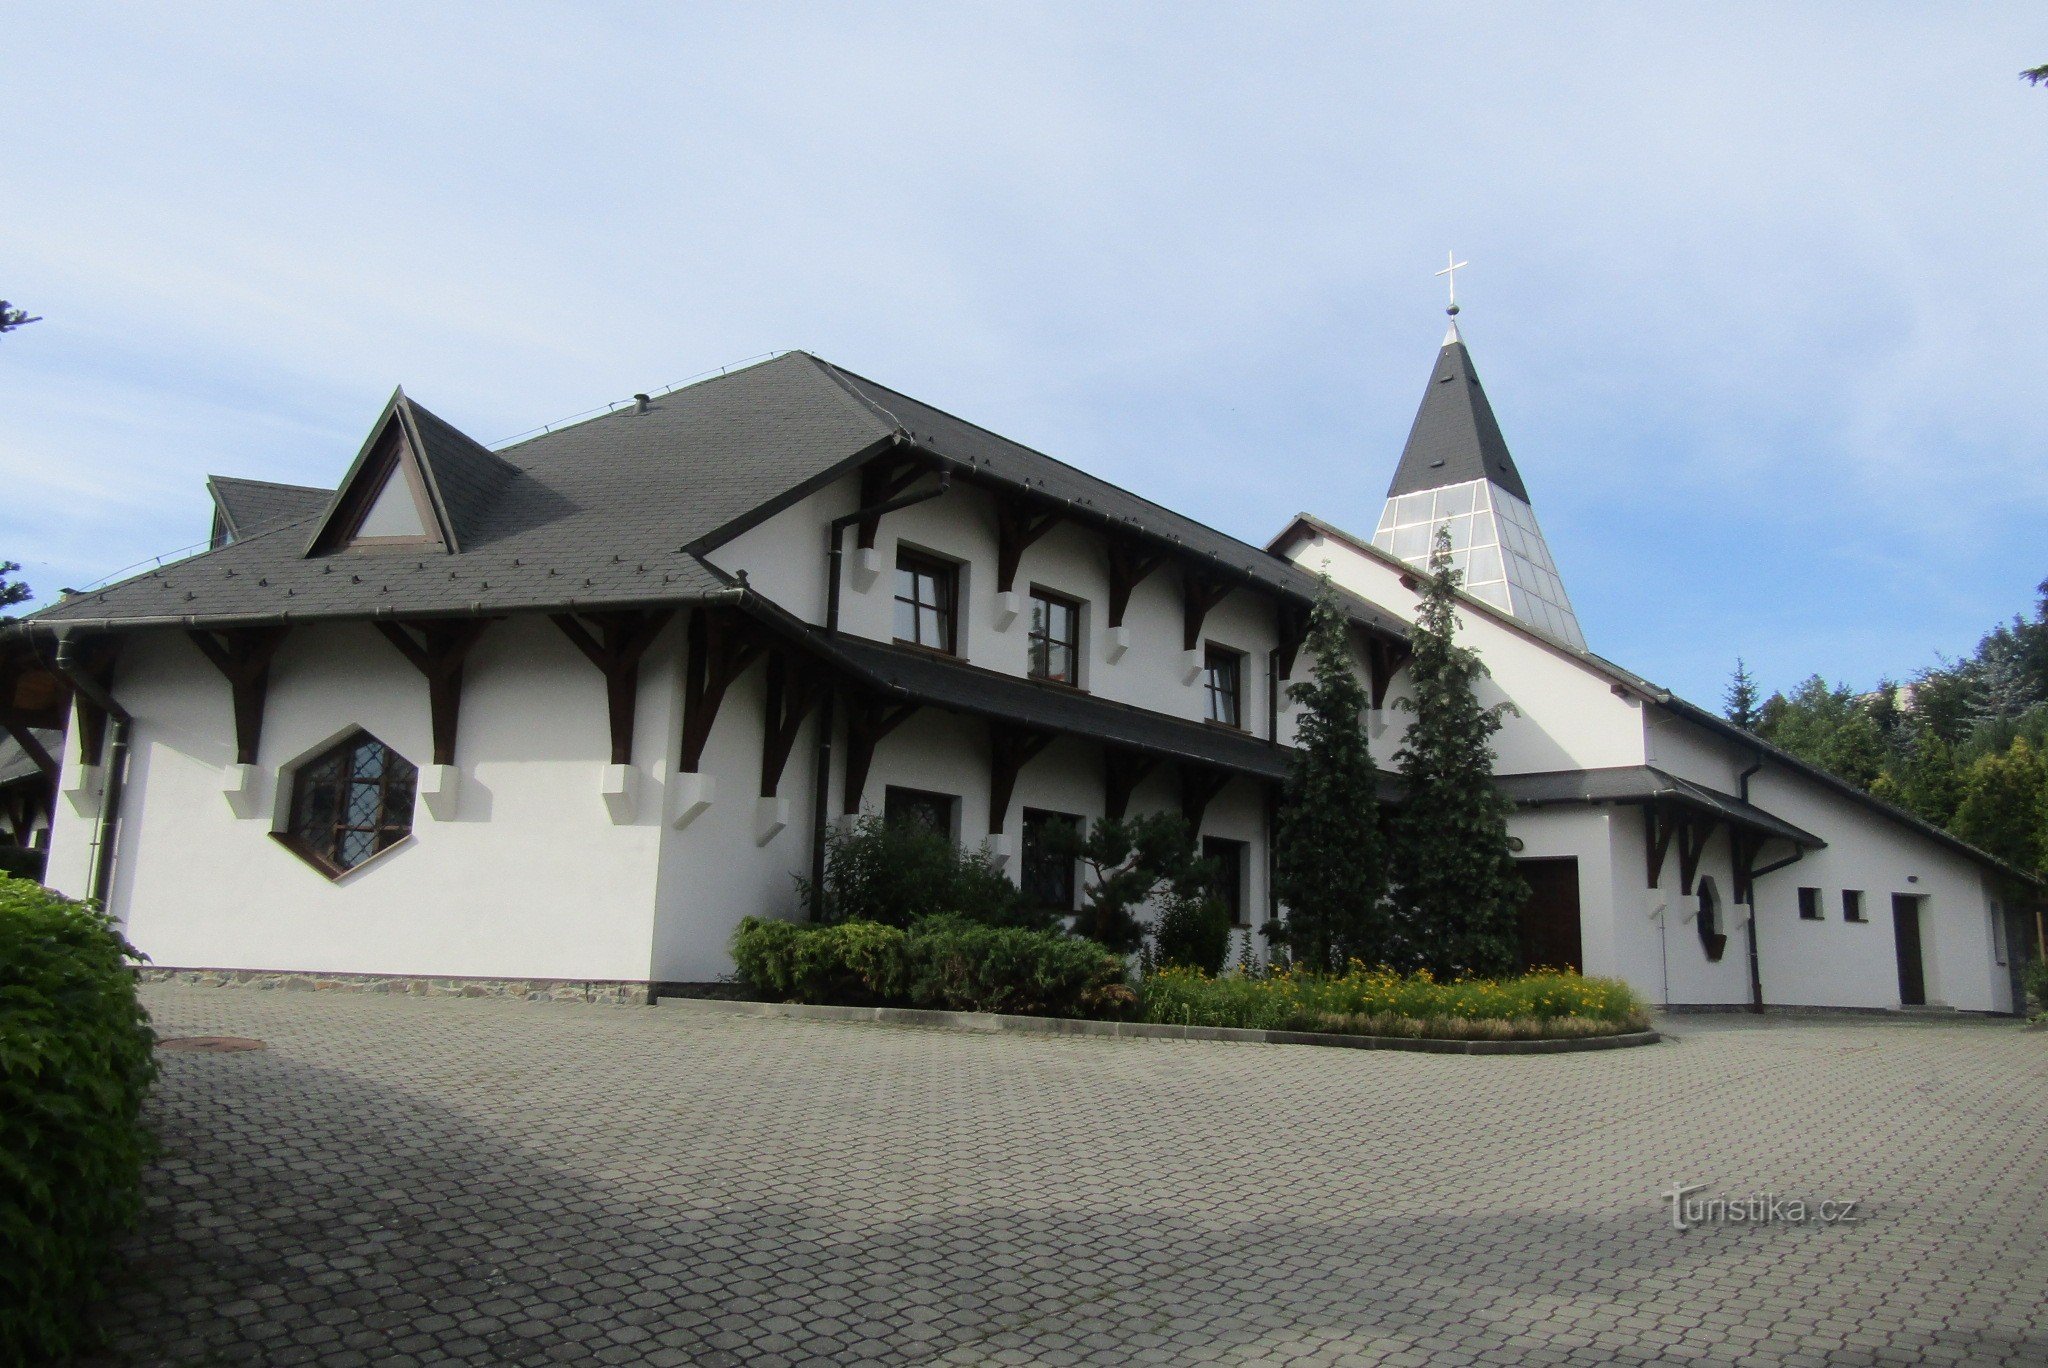 Monastery of St. Agnes Česká